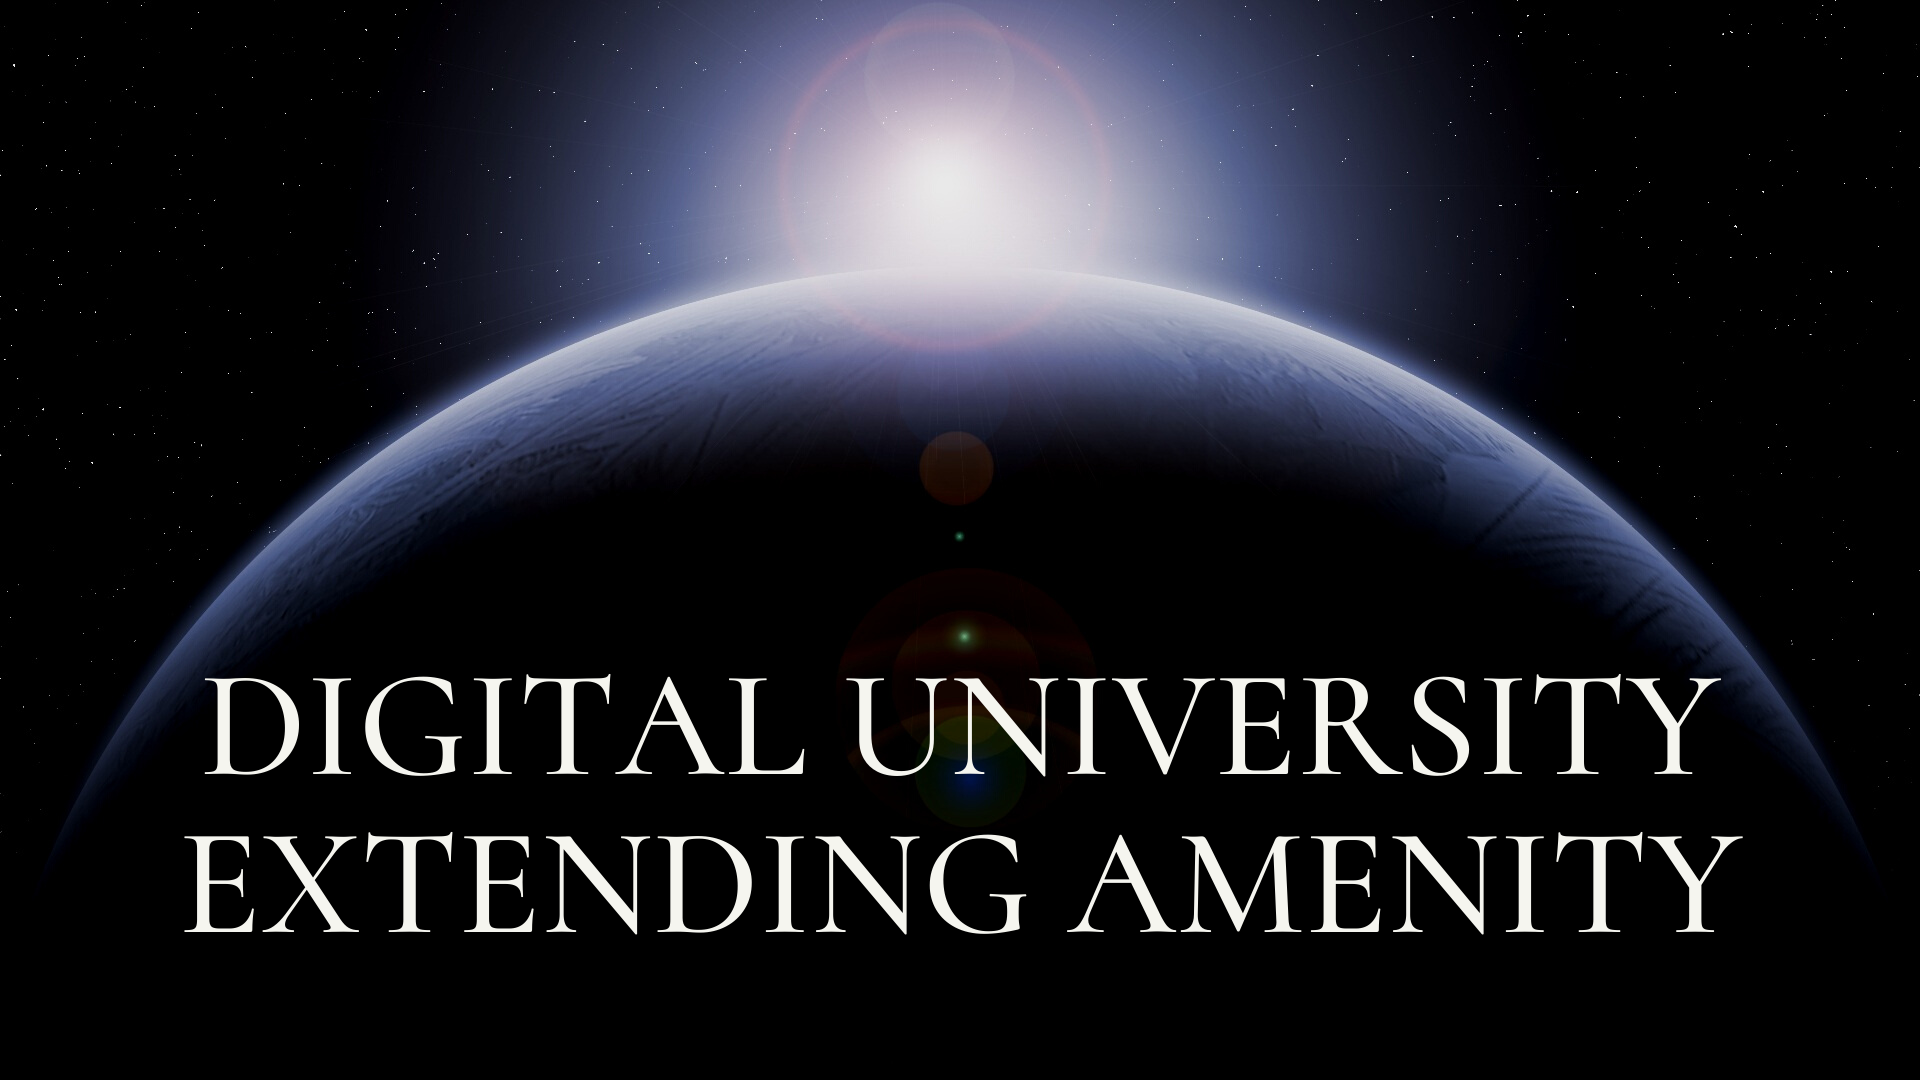 Digital University Extending Amenity